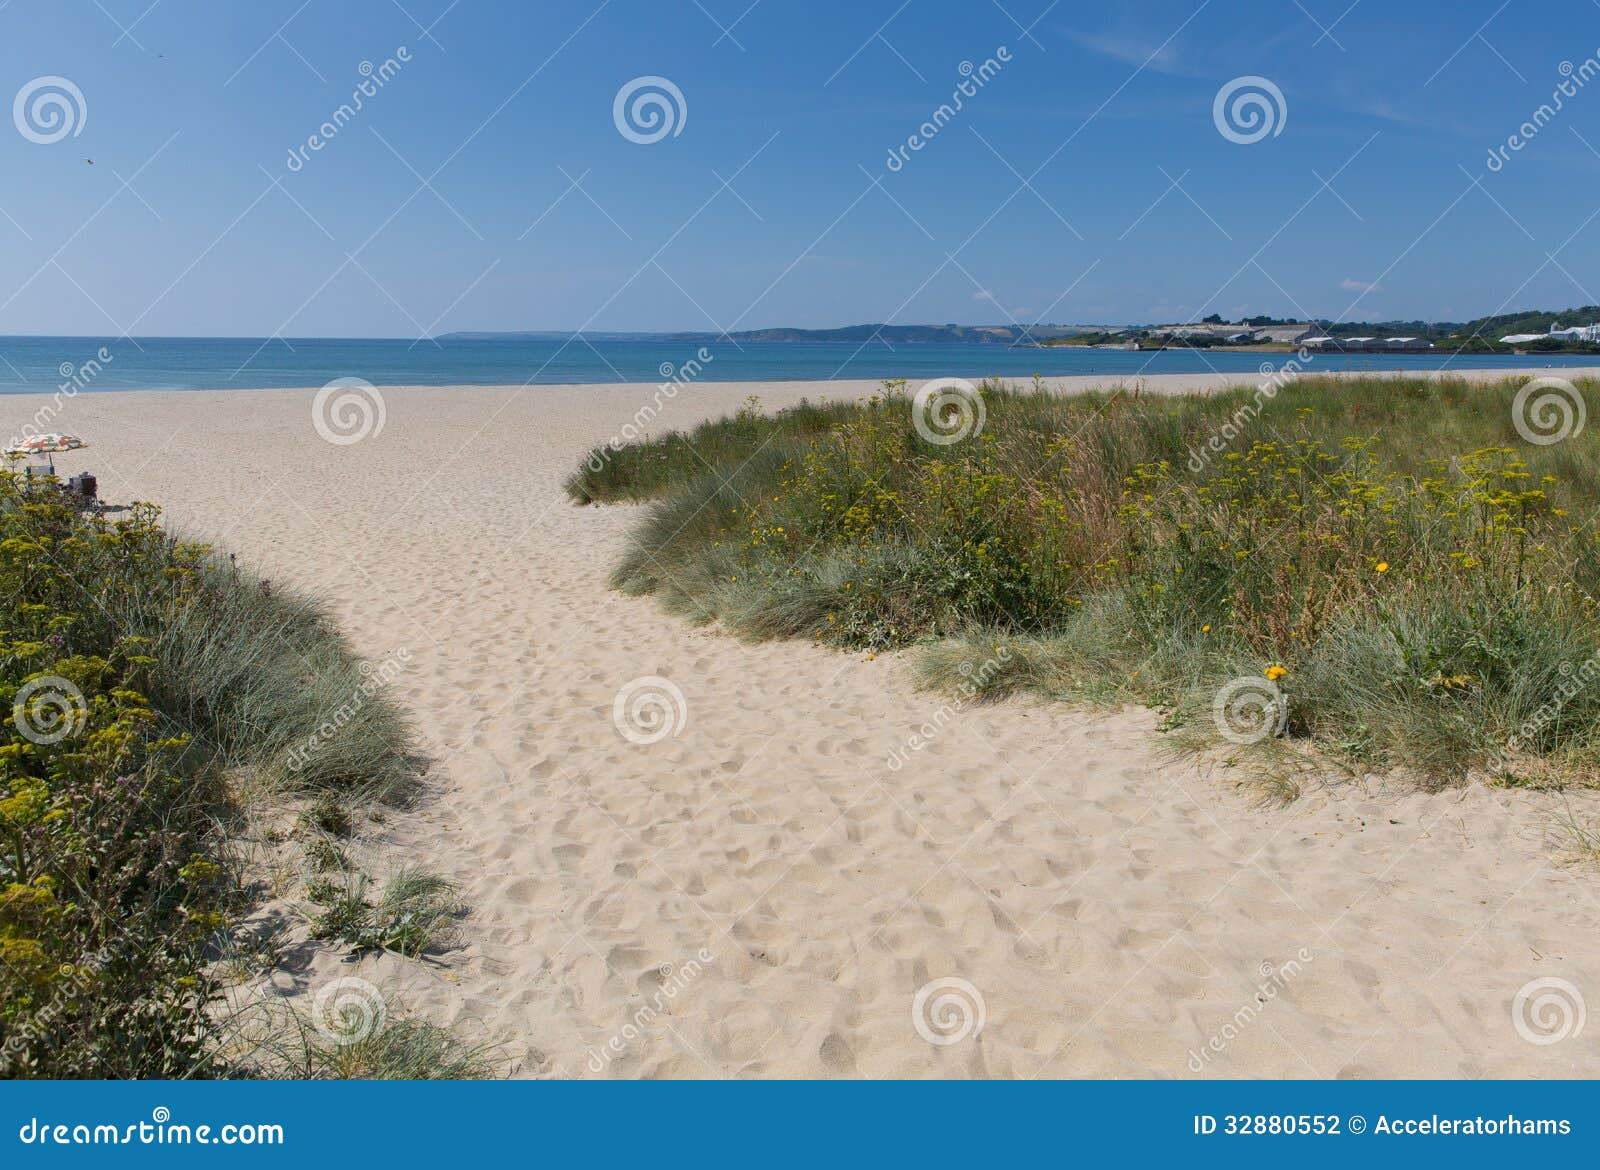 sandy beach par cornwall england near st austell and polkerris with blue sea and sky